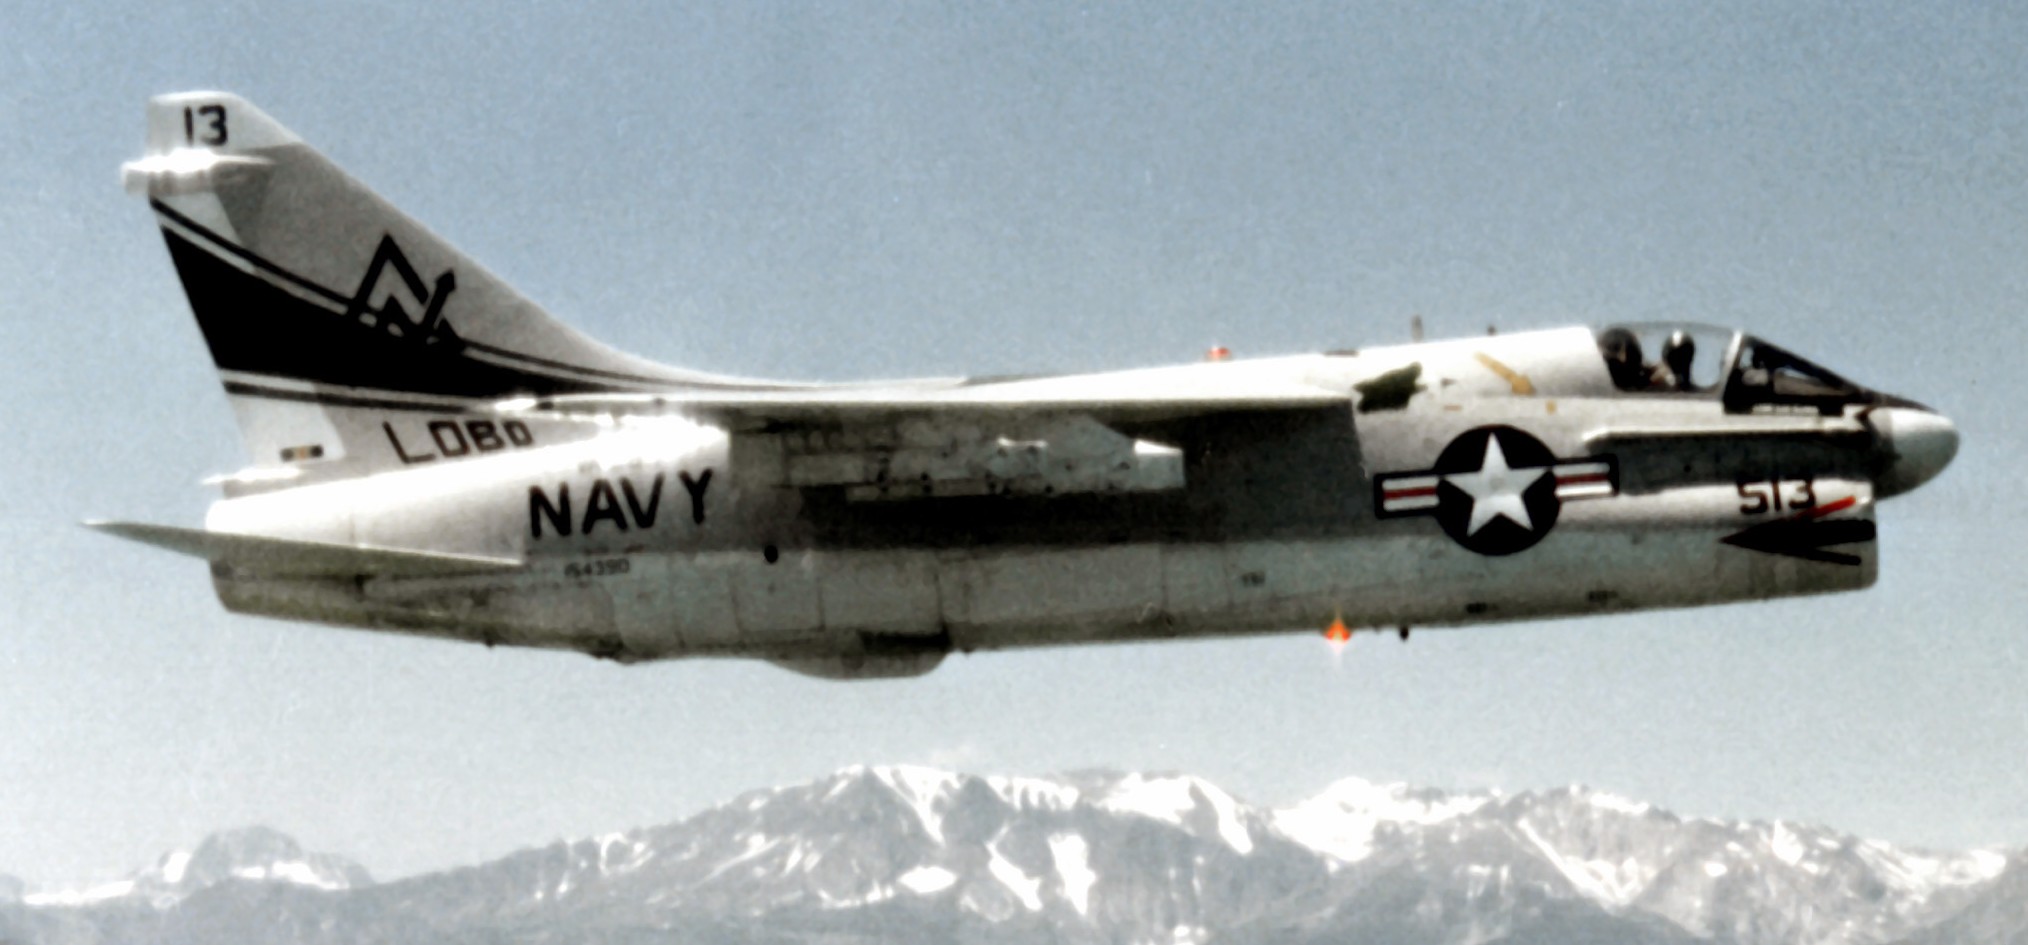 va-305 lobos attack squadron atkron us navy a-7b corsair ii reserve 10 nas point mugu